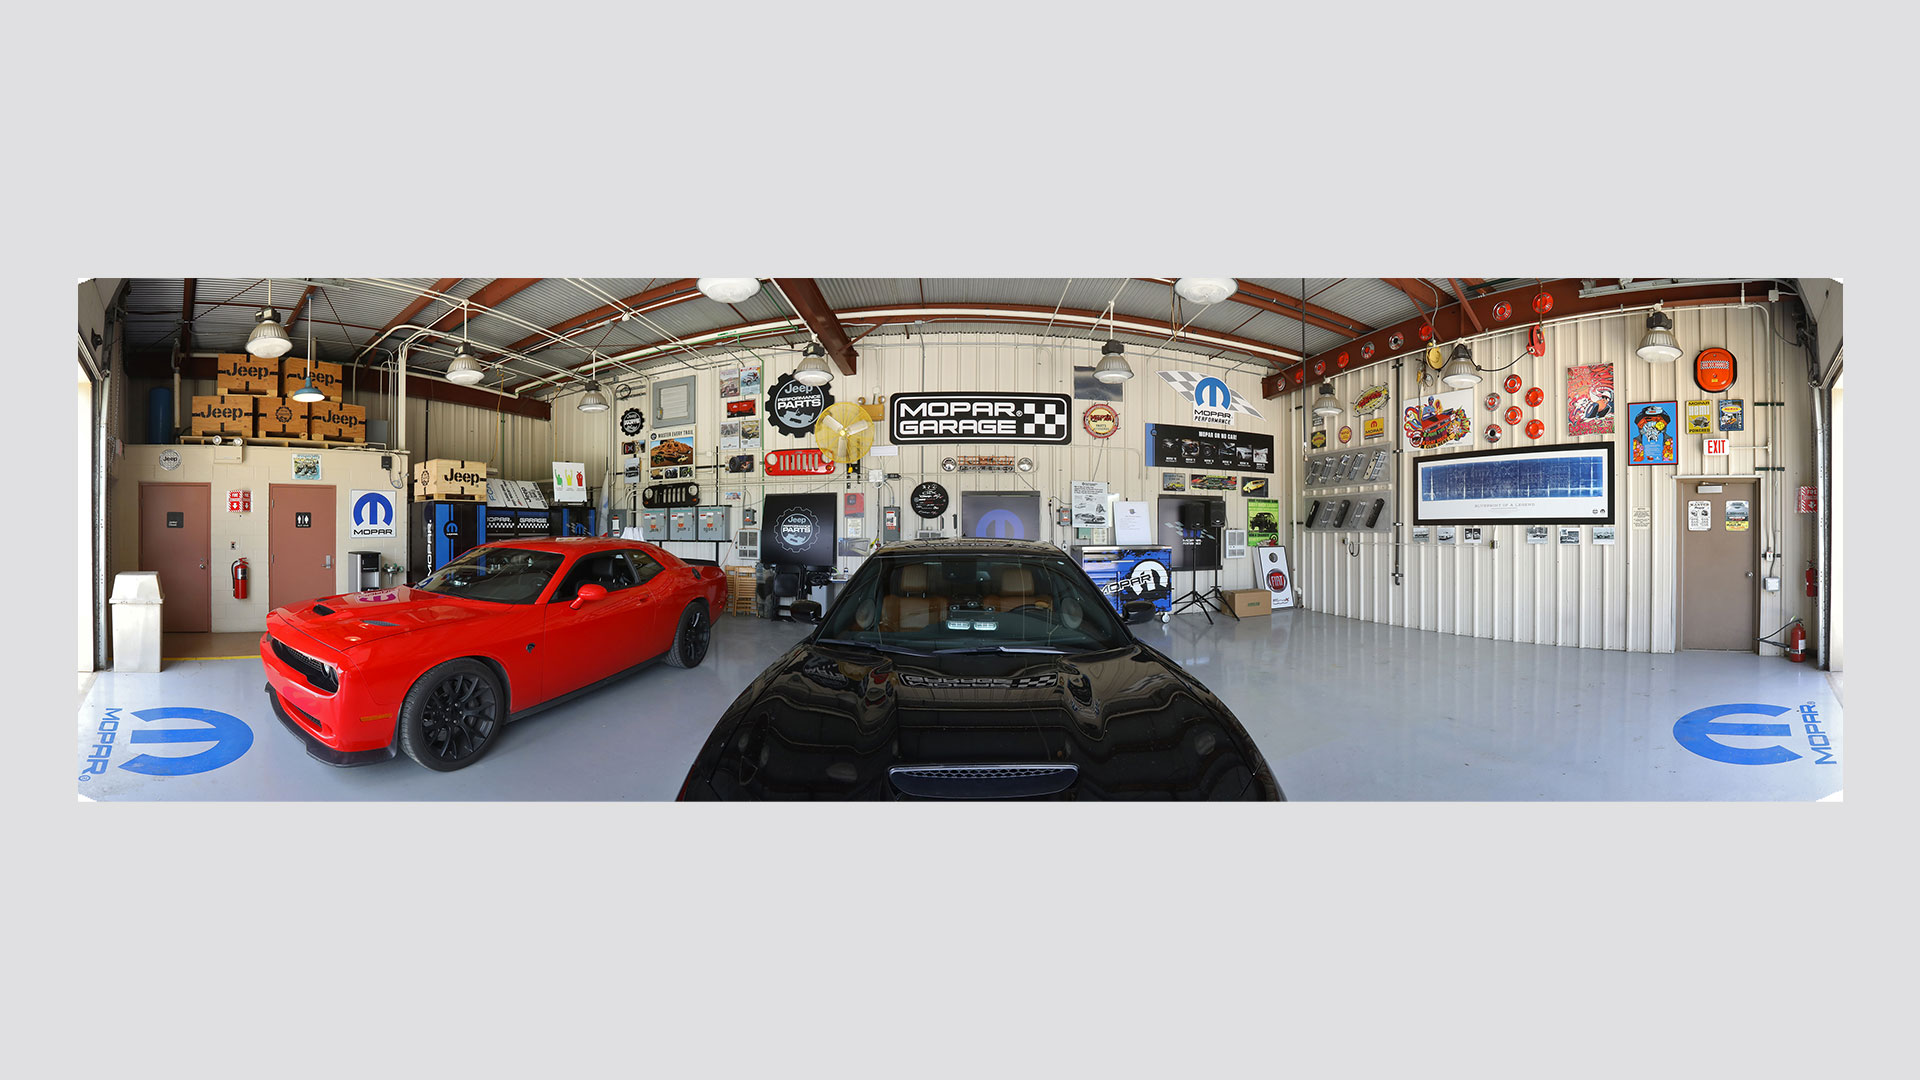 Image of Mopar Garage internal view